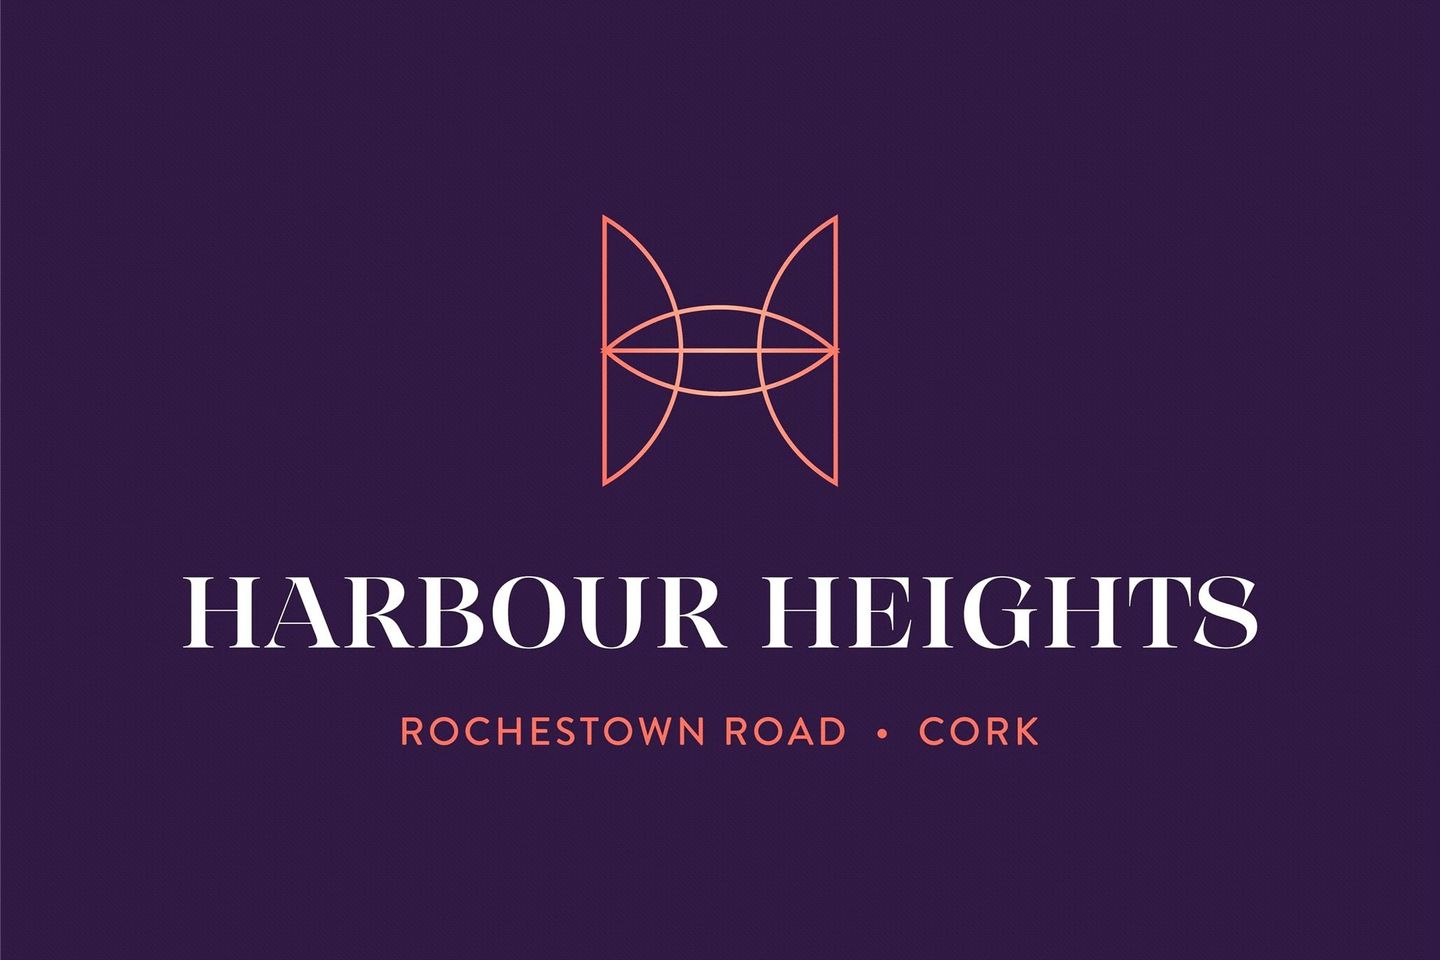 Two Bed Mid Terrace/End Terrace, Harbour Heights, Two Bed Mid Terrace/End Terrace, Harbour Heights, Rochestown, Co. Cork